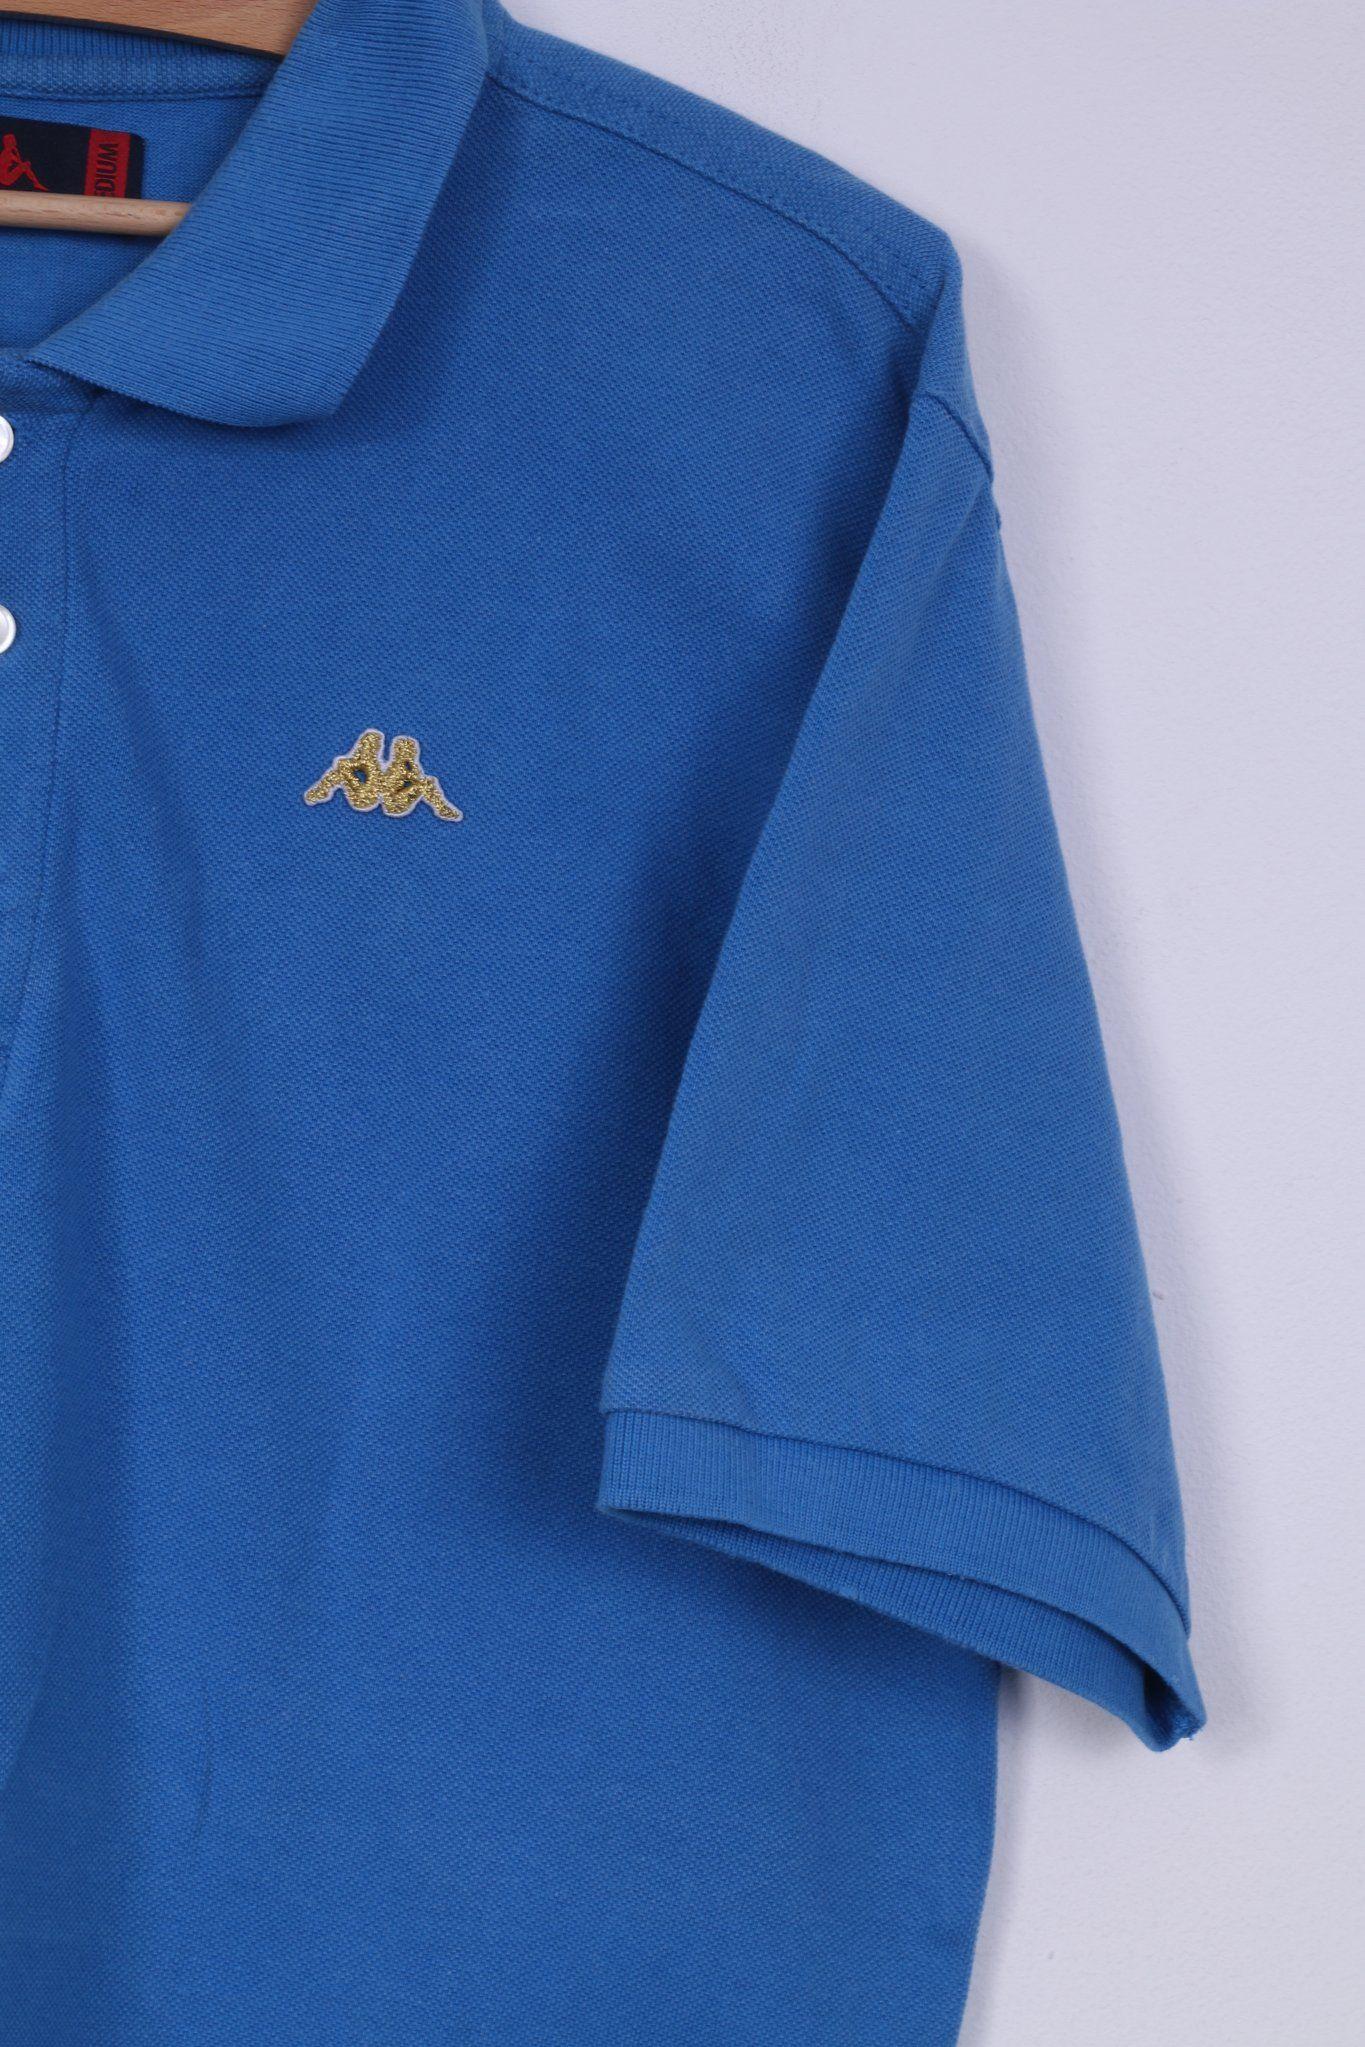 Gold Polo Logo - Robe Di Kappa Mens M Polo Shirt Cotton Blue Gold Logo ...